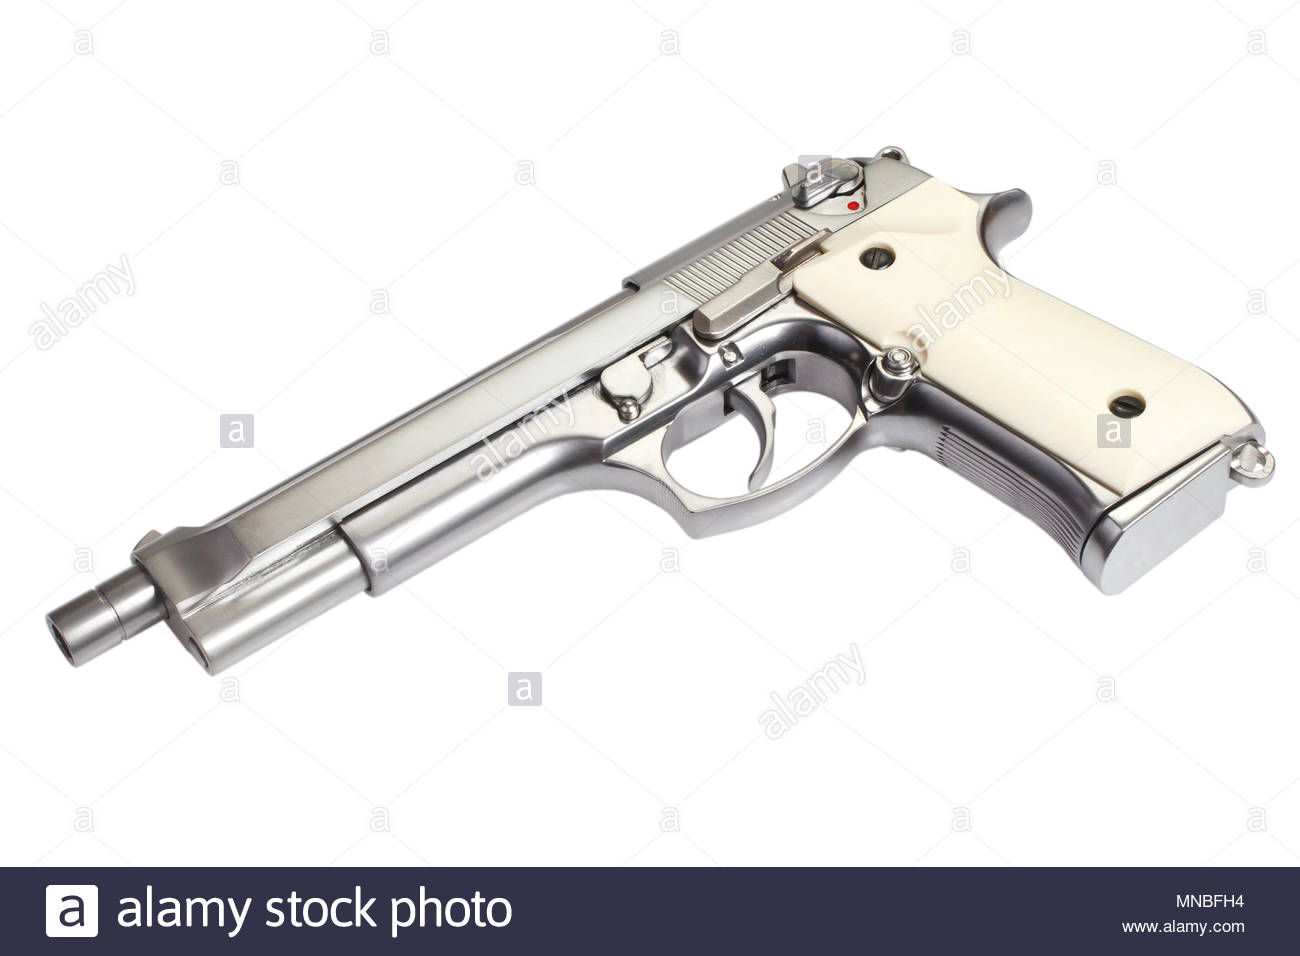 Beretta M9 Long Gun Isolated On White Background Stock Photo